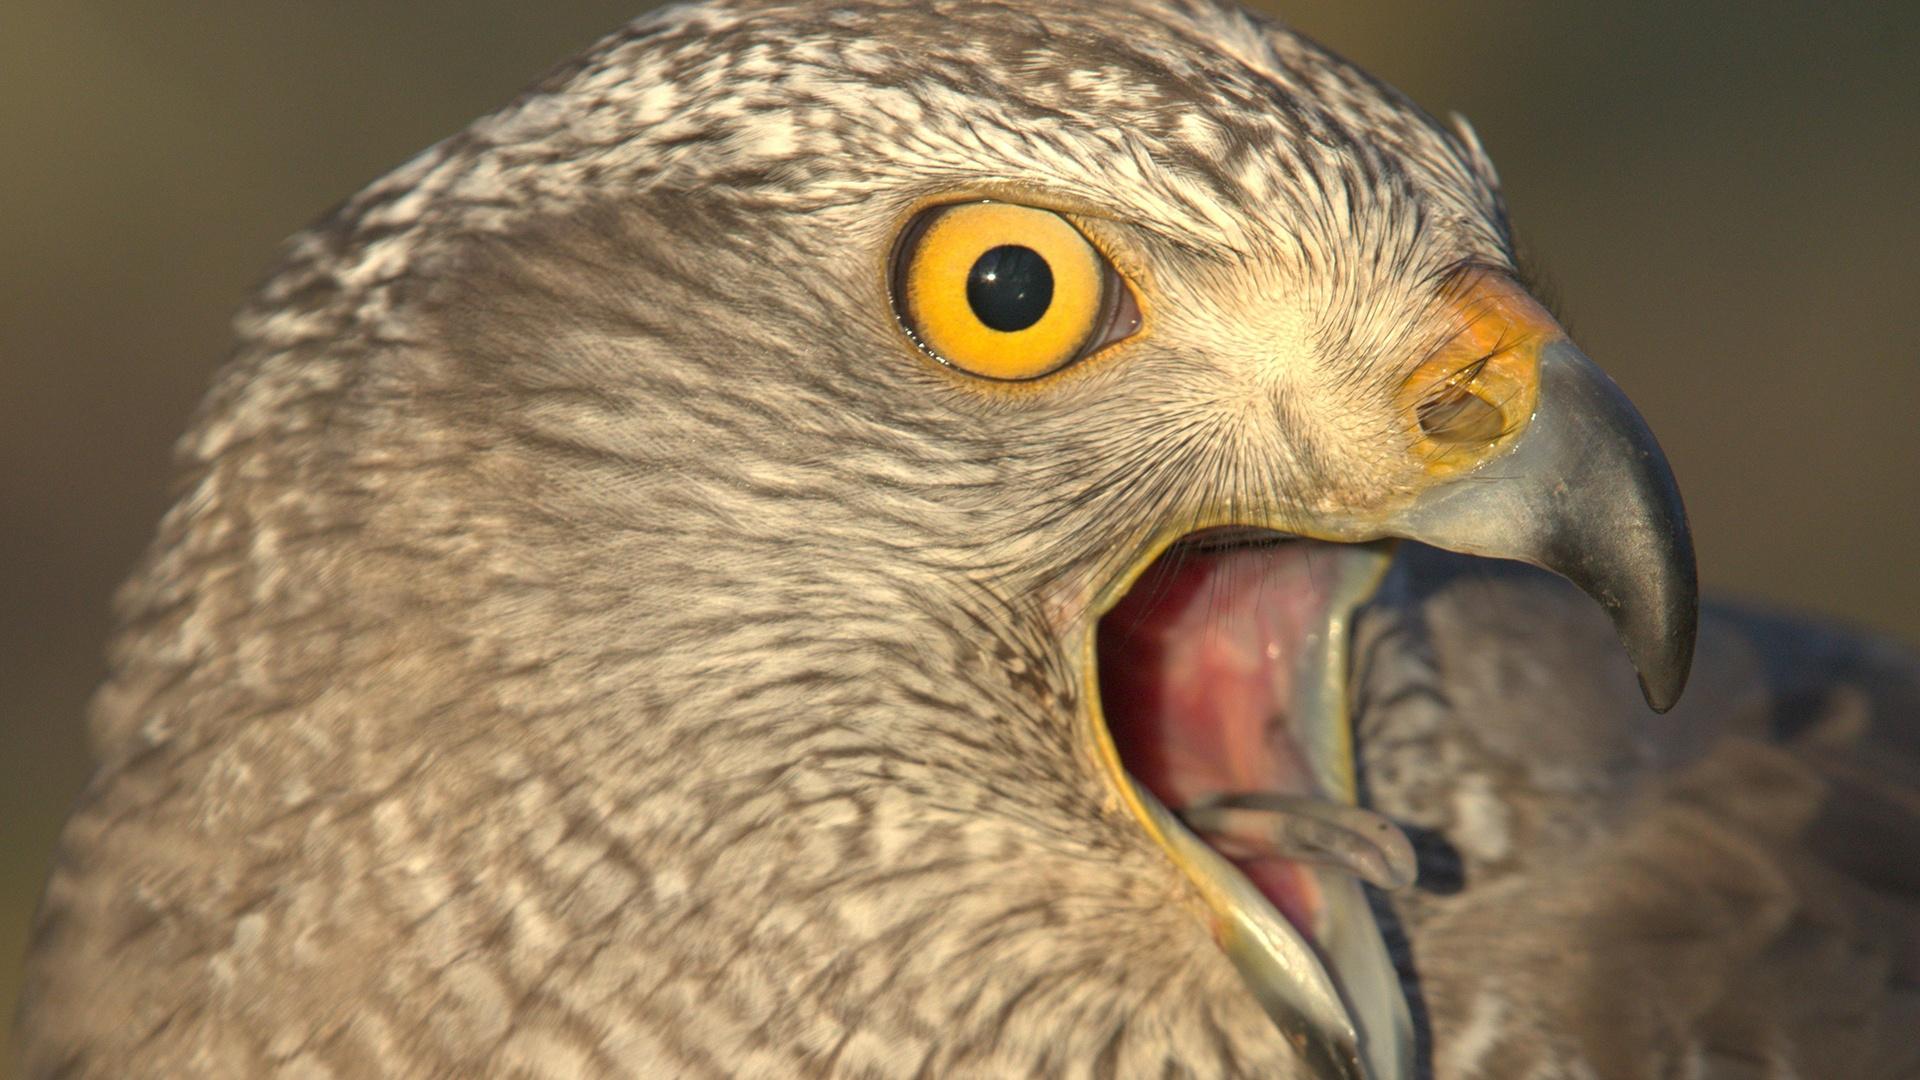 Closeup of an eagle's face